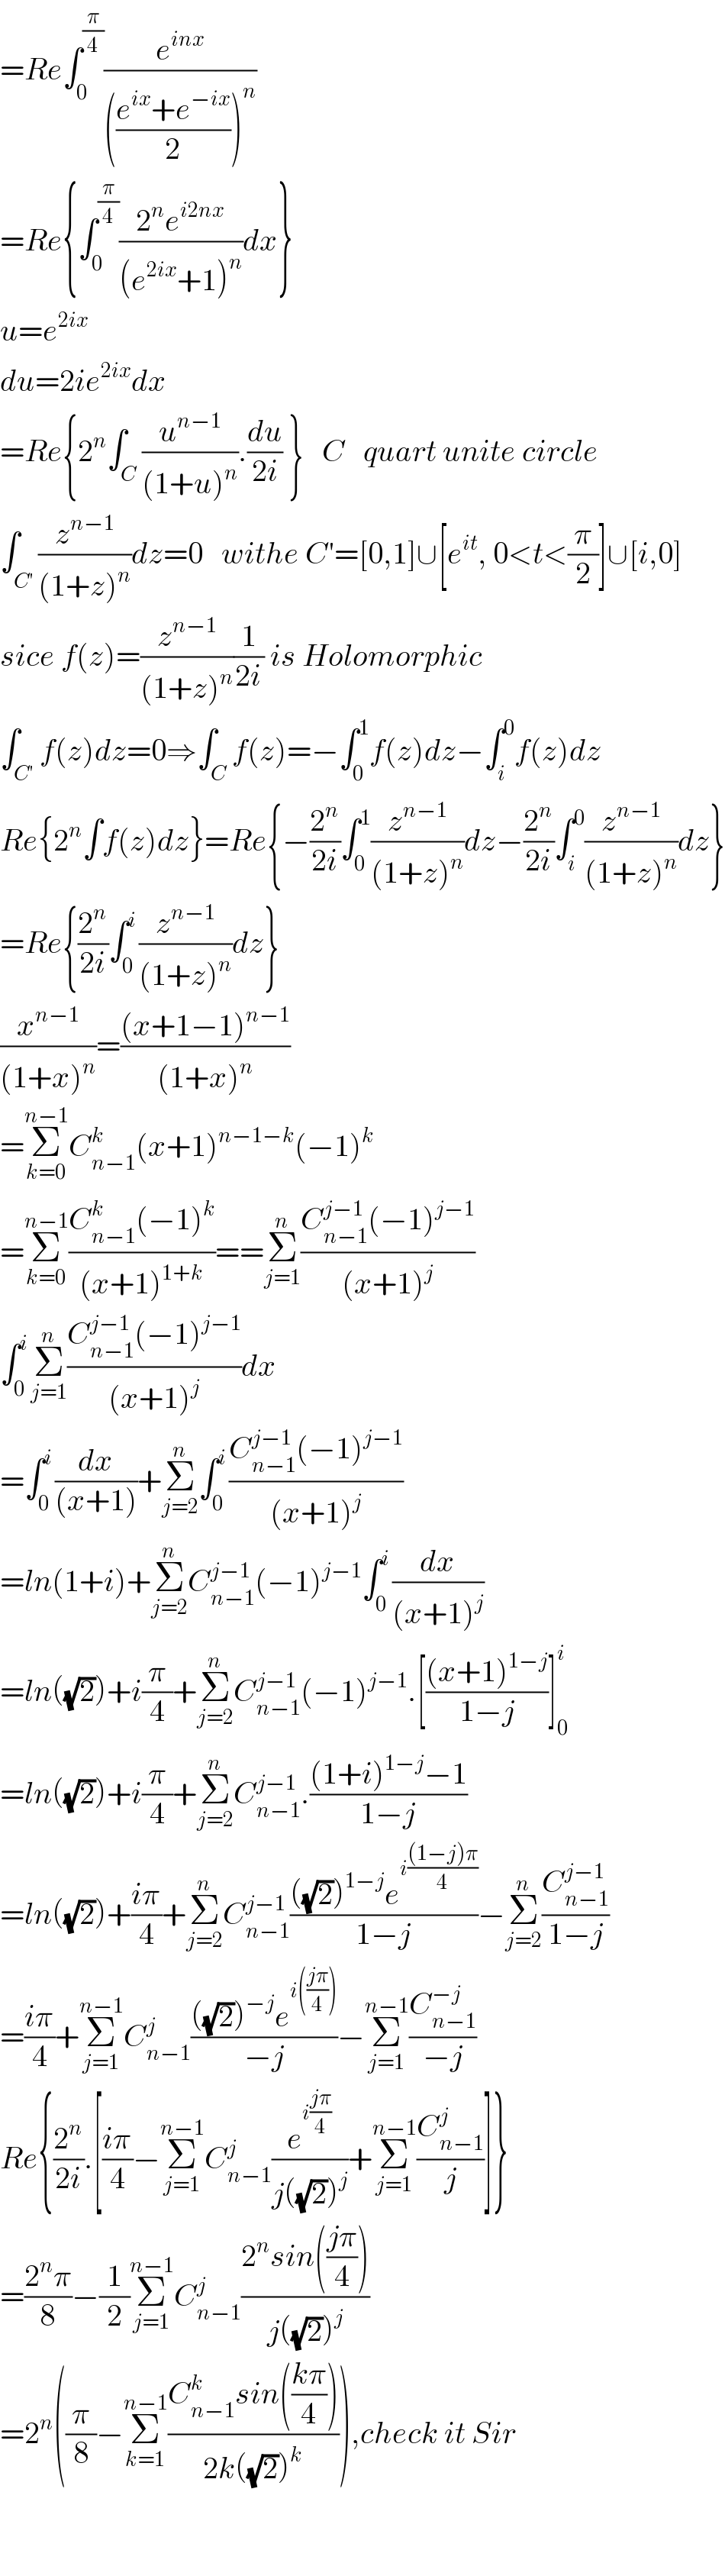 =Re∫_0 ^(π/4) (e^(inx) /((((e^(ix) +e^(−ix) )/2))^n ))   =Re{∫_0 ^(π/4) ((2^n e^(i2nx) )/((e^(2ix) +1)^n ))dx}  u=e^(2ix)   du=2ie^(2ix) dx  =Re{2^n ∫_C (u^(n−1) /((1+u)^n )).(du/(2i)) }   C   quart unite circle  ∫_C^′  (z^(n−1) /((1+z)^n ))dz=0   withe C′=[0,1]∪[e^(it) , 0<t<(π/2)]∪[i,0]  sice f(z)=(z^(n−1) /((1+z)^n ))(1/(2i)) is Holomorphic  ∫_(C′) f(z)dz=0⇒∫_C f(z)=−∫_0 ^1 f(z)dz−∫_i ^0 f(z)dz  Re{2^n ∫f(z)dz}=Re{−(2^n /(2i))∫_0 ^1 (z^(n−1) /((1+z)^n ))dz−(2^n /(2i))∫_i ^0 (z^(n−1) /((1+z)^n ))dz}  =Re{(2^n /(2i))∫_0 ^i (z^(n−1) /((1+z)^n ))dz}  (x^(n−1) /((1+x)^n ))=(((x+1−1)^(n−1) )/((1+x)^n ))  =Σ_(k=0) ^(n−1) C_(n−1) ^k (x+1)^(n−1−k) (−1)^k   =Σ_(k=0) ^(n−1) ((C_(n−1) ^k (−1)^k )/((x+1)^(1+k) ))==Σ_(j=1) ^n ((C_(n−1) ^(j−1) (−1)^(j−1) )/((x+1)^j ))  ∫_0 ^i Σ_(j=1) ^n ((C_(n−1) ^(j−1) (−1)^(j−1) )/((x+1)^j ))dx  =∫_0 ^i (dx/((x+1)))+Σ_(j=2) ^n ∫_0 ^i ((C_(n−1) ^(j−1) (−1)^(j−1) )/((x+1)^j ))  =ln(1+i)+Σ_(j=2) ^n C_(n−1) ^(j−1) (−1)^(j−1) ∫_0 ^i (dx/((x+1)^j ))  =ln((√2))+i(π/4)+Σ_(j=2) ^n C_(n−1) ^(j−1) (−1)^(j−1) .[(((x+1)^(1−j) )/(1−j))]_0 ^i   =ln((√2))+i(π/4)+Σ_(j=2) ^n C_(n−1) ^(j−1) .(((1+i)^(1−j) −1)/(1−j))  =ln((√2))+((iπ)/4)+Σ_(j=2) ^n C_(n−1) ^(j−1) ((((√2))^(1−j) e^(i(((1−j)π)/4)) )/(1−j))−Σ_(j=2) ^n (C_(n−1) ^(j−1) /(1−j))  =((iπ)/4)+Σ_(j=1) ^(n−1) C_(n−1) ^j ((((√2))^(−j) e^(i(((jπ)/4))) )/(−j))−Σ_(j=1) ^(n−1) (C_(n−1) ^(−j) /(−j))  Re{(2^n /(2i)).[((iπ)/4)−Σ_(j=1) ^(n−1) C_(n−1) ^j (e^(i((jπ)/4)) /(j((√2))^j ))+Σ_(j=1) ^(n−1) (C_(n−1) ^j /j)]}  =((2^n π)/8)−(1/2)Σ_(j=1) ^(n−1) C_(n−1) ^j ((2^n sin(((jπ)/4)))/(j((√2))^j ))  =2^n ((π/8)−Σ_(k=1) ^(n−1) ((C_(n−1) ^k sin(((kπ)/4)))/(2k((√2))^k ))),check it Sir      